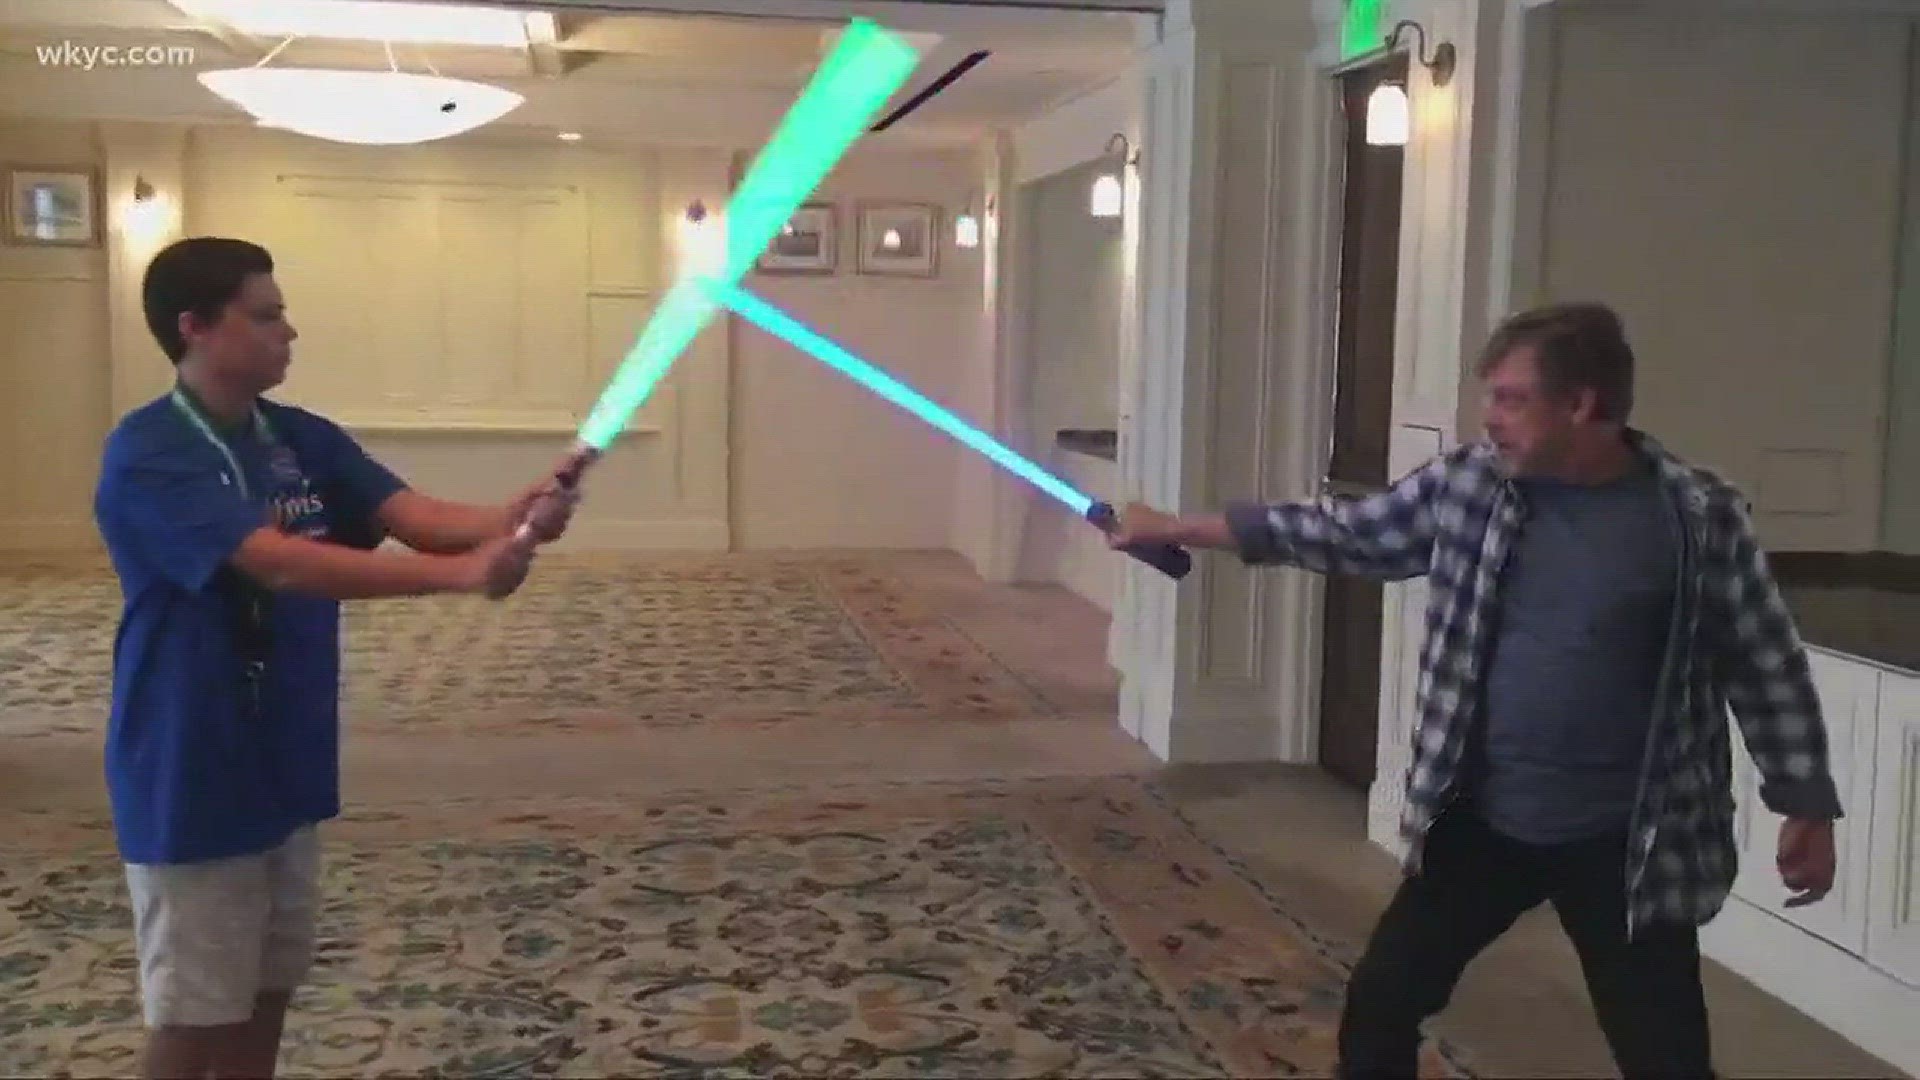 Star Wars superfan hangs with Mark Hamill